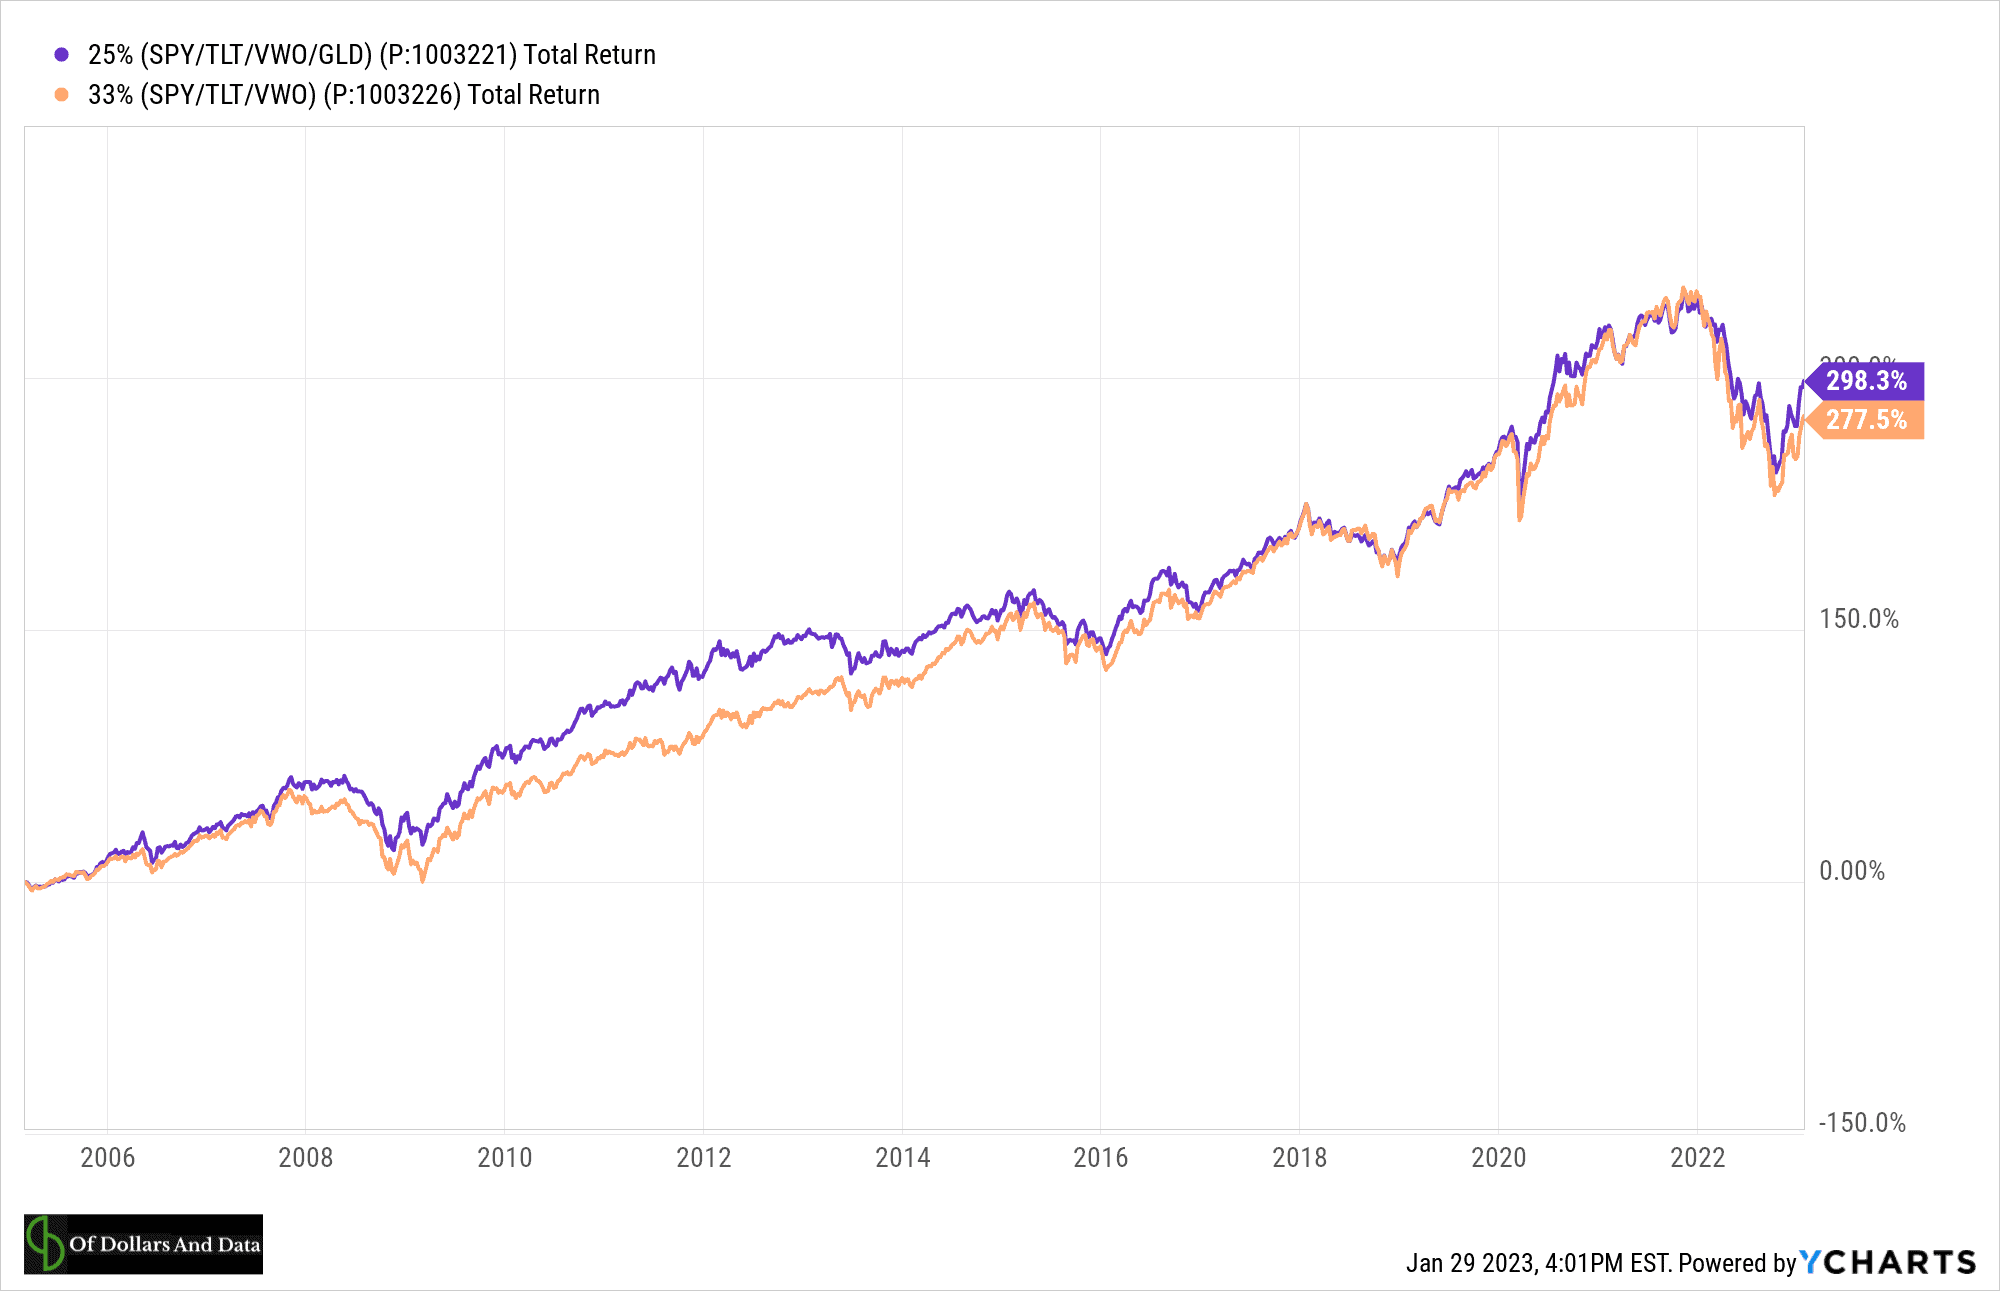 Chart of 33/33/33 SPY/TLT/VWO portfolio and a 25/25/25/25 SPY/TLT/VWO/GLD portfolio from 2005 to January 2023.